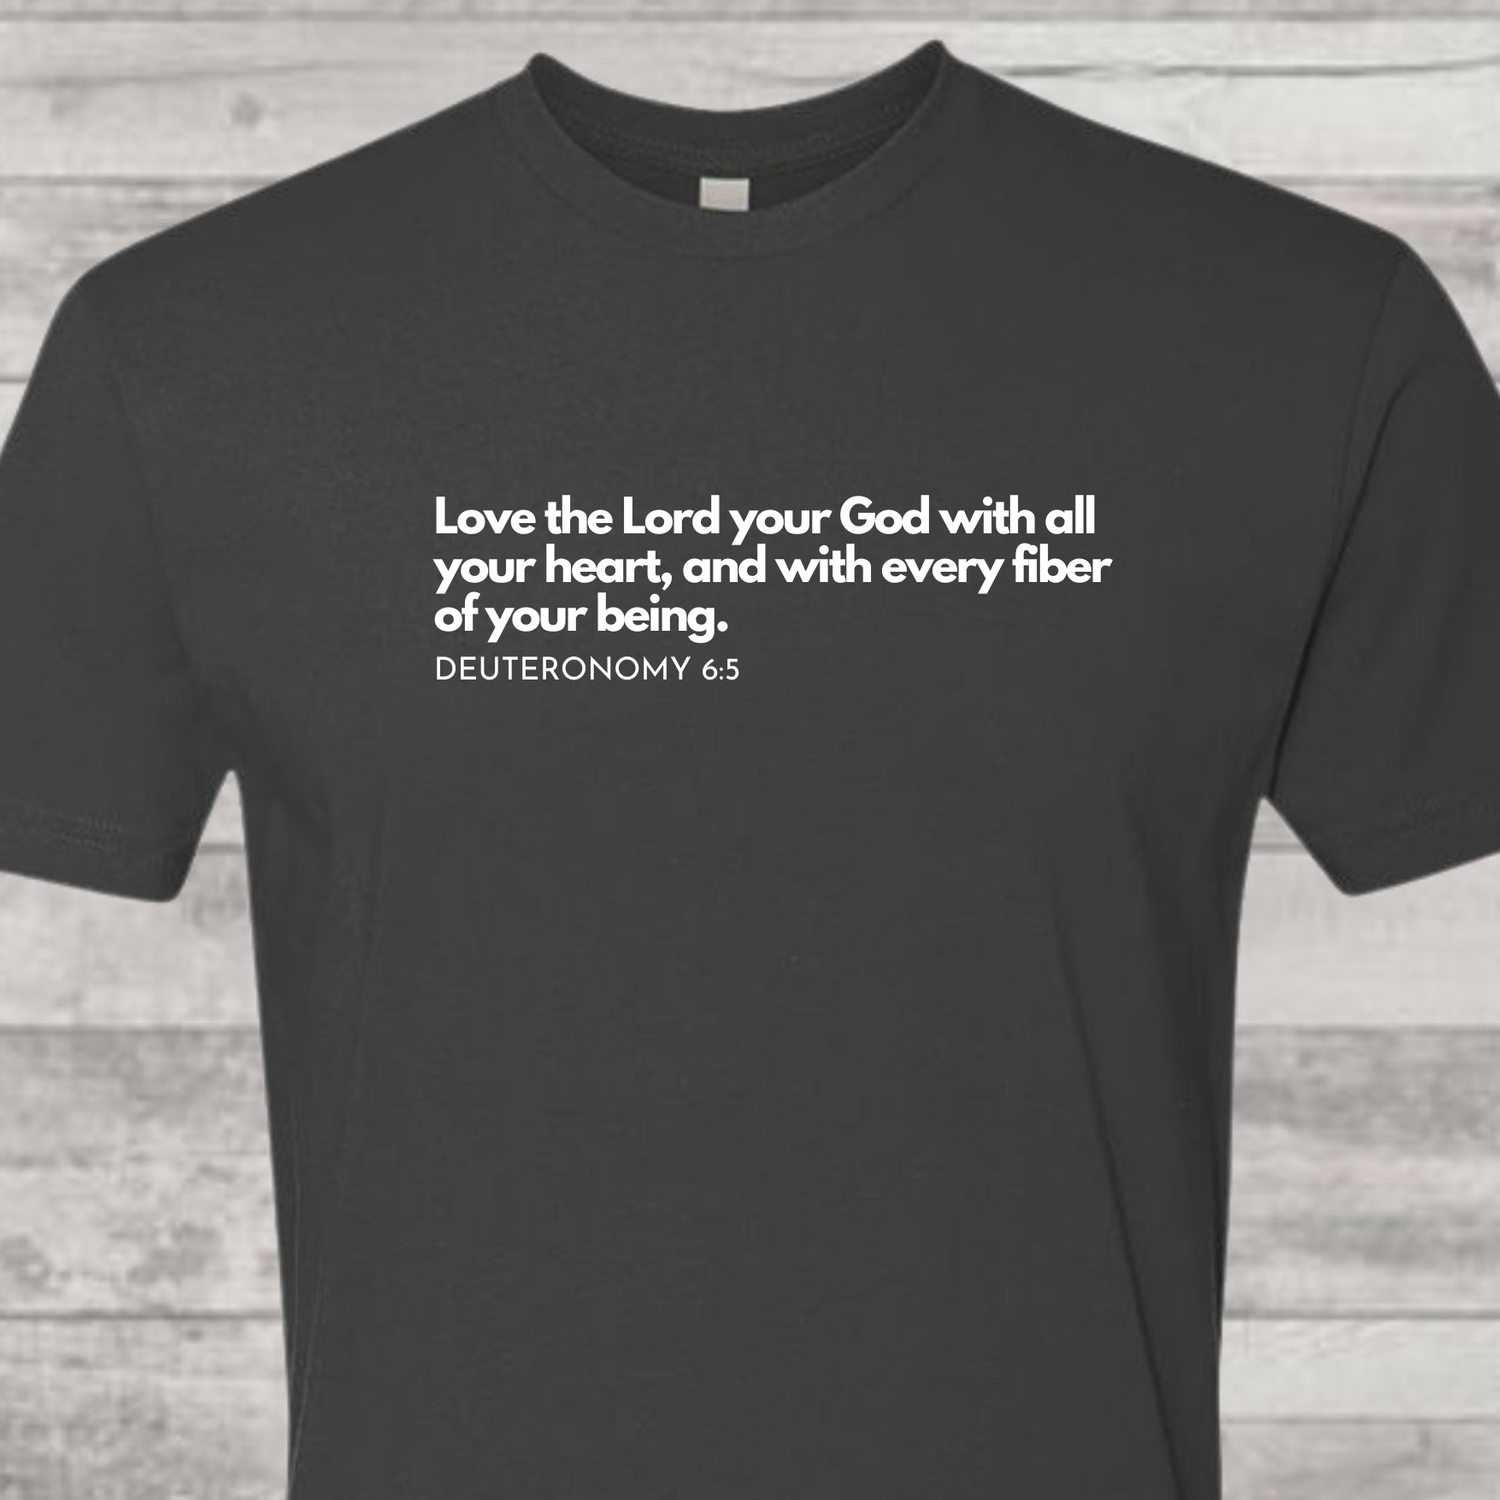 Deuteronomy 6:5, T-shirts, Hoodies, Sweatshirt, coffee mugs